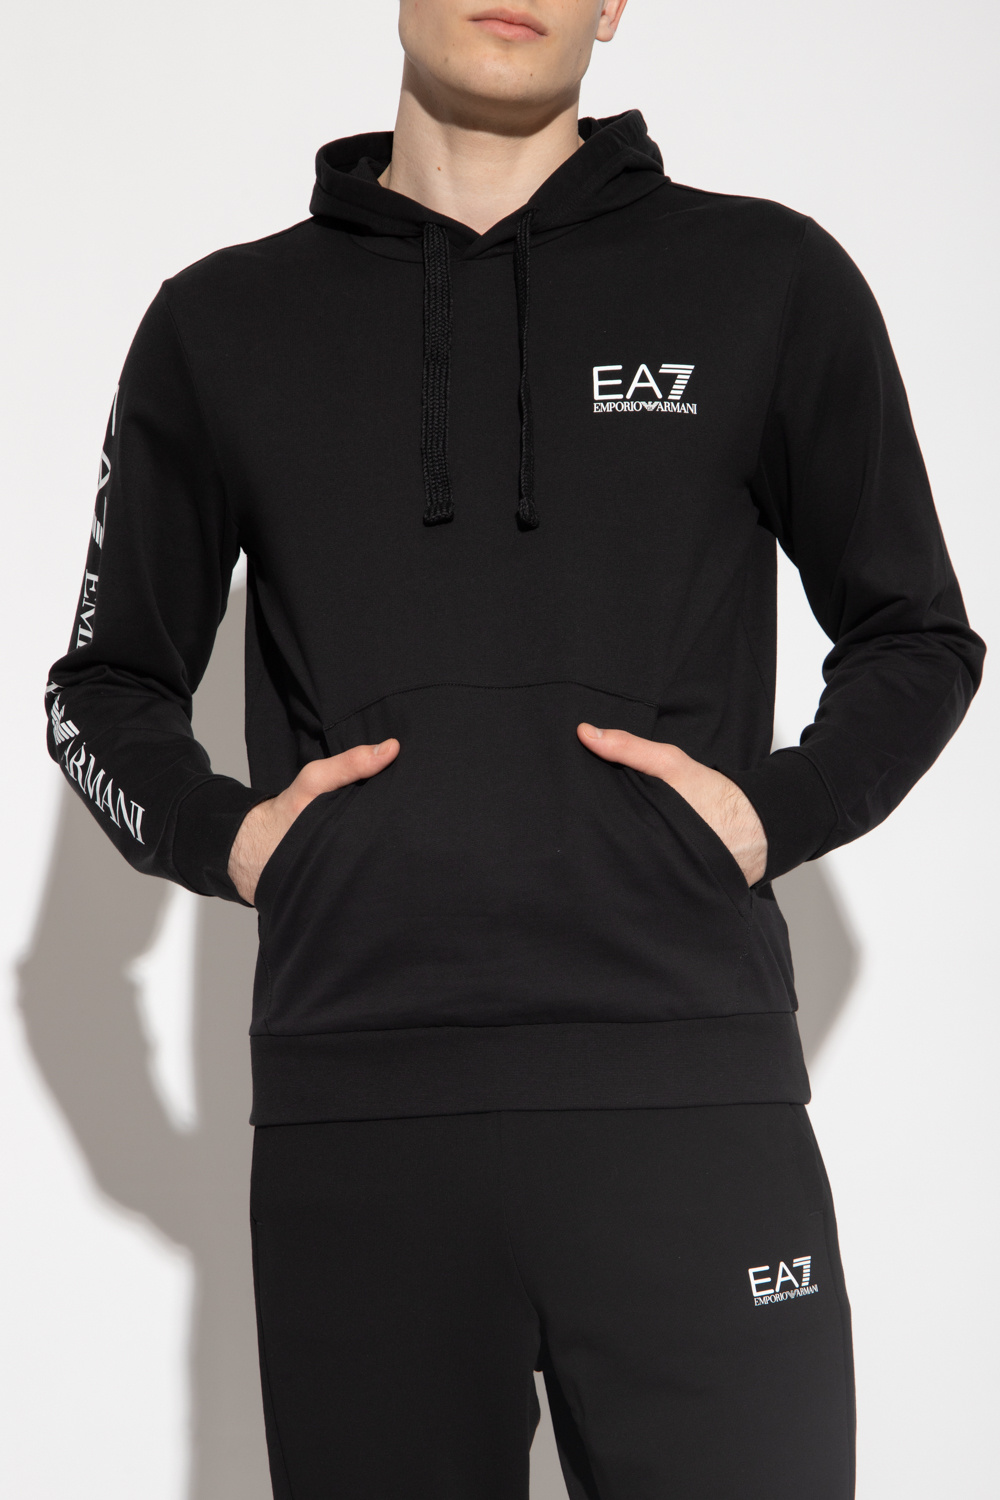 EA7 Emporio curved armani emporio curved armani ea logo printed t shirt item